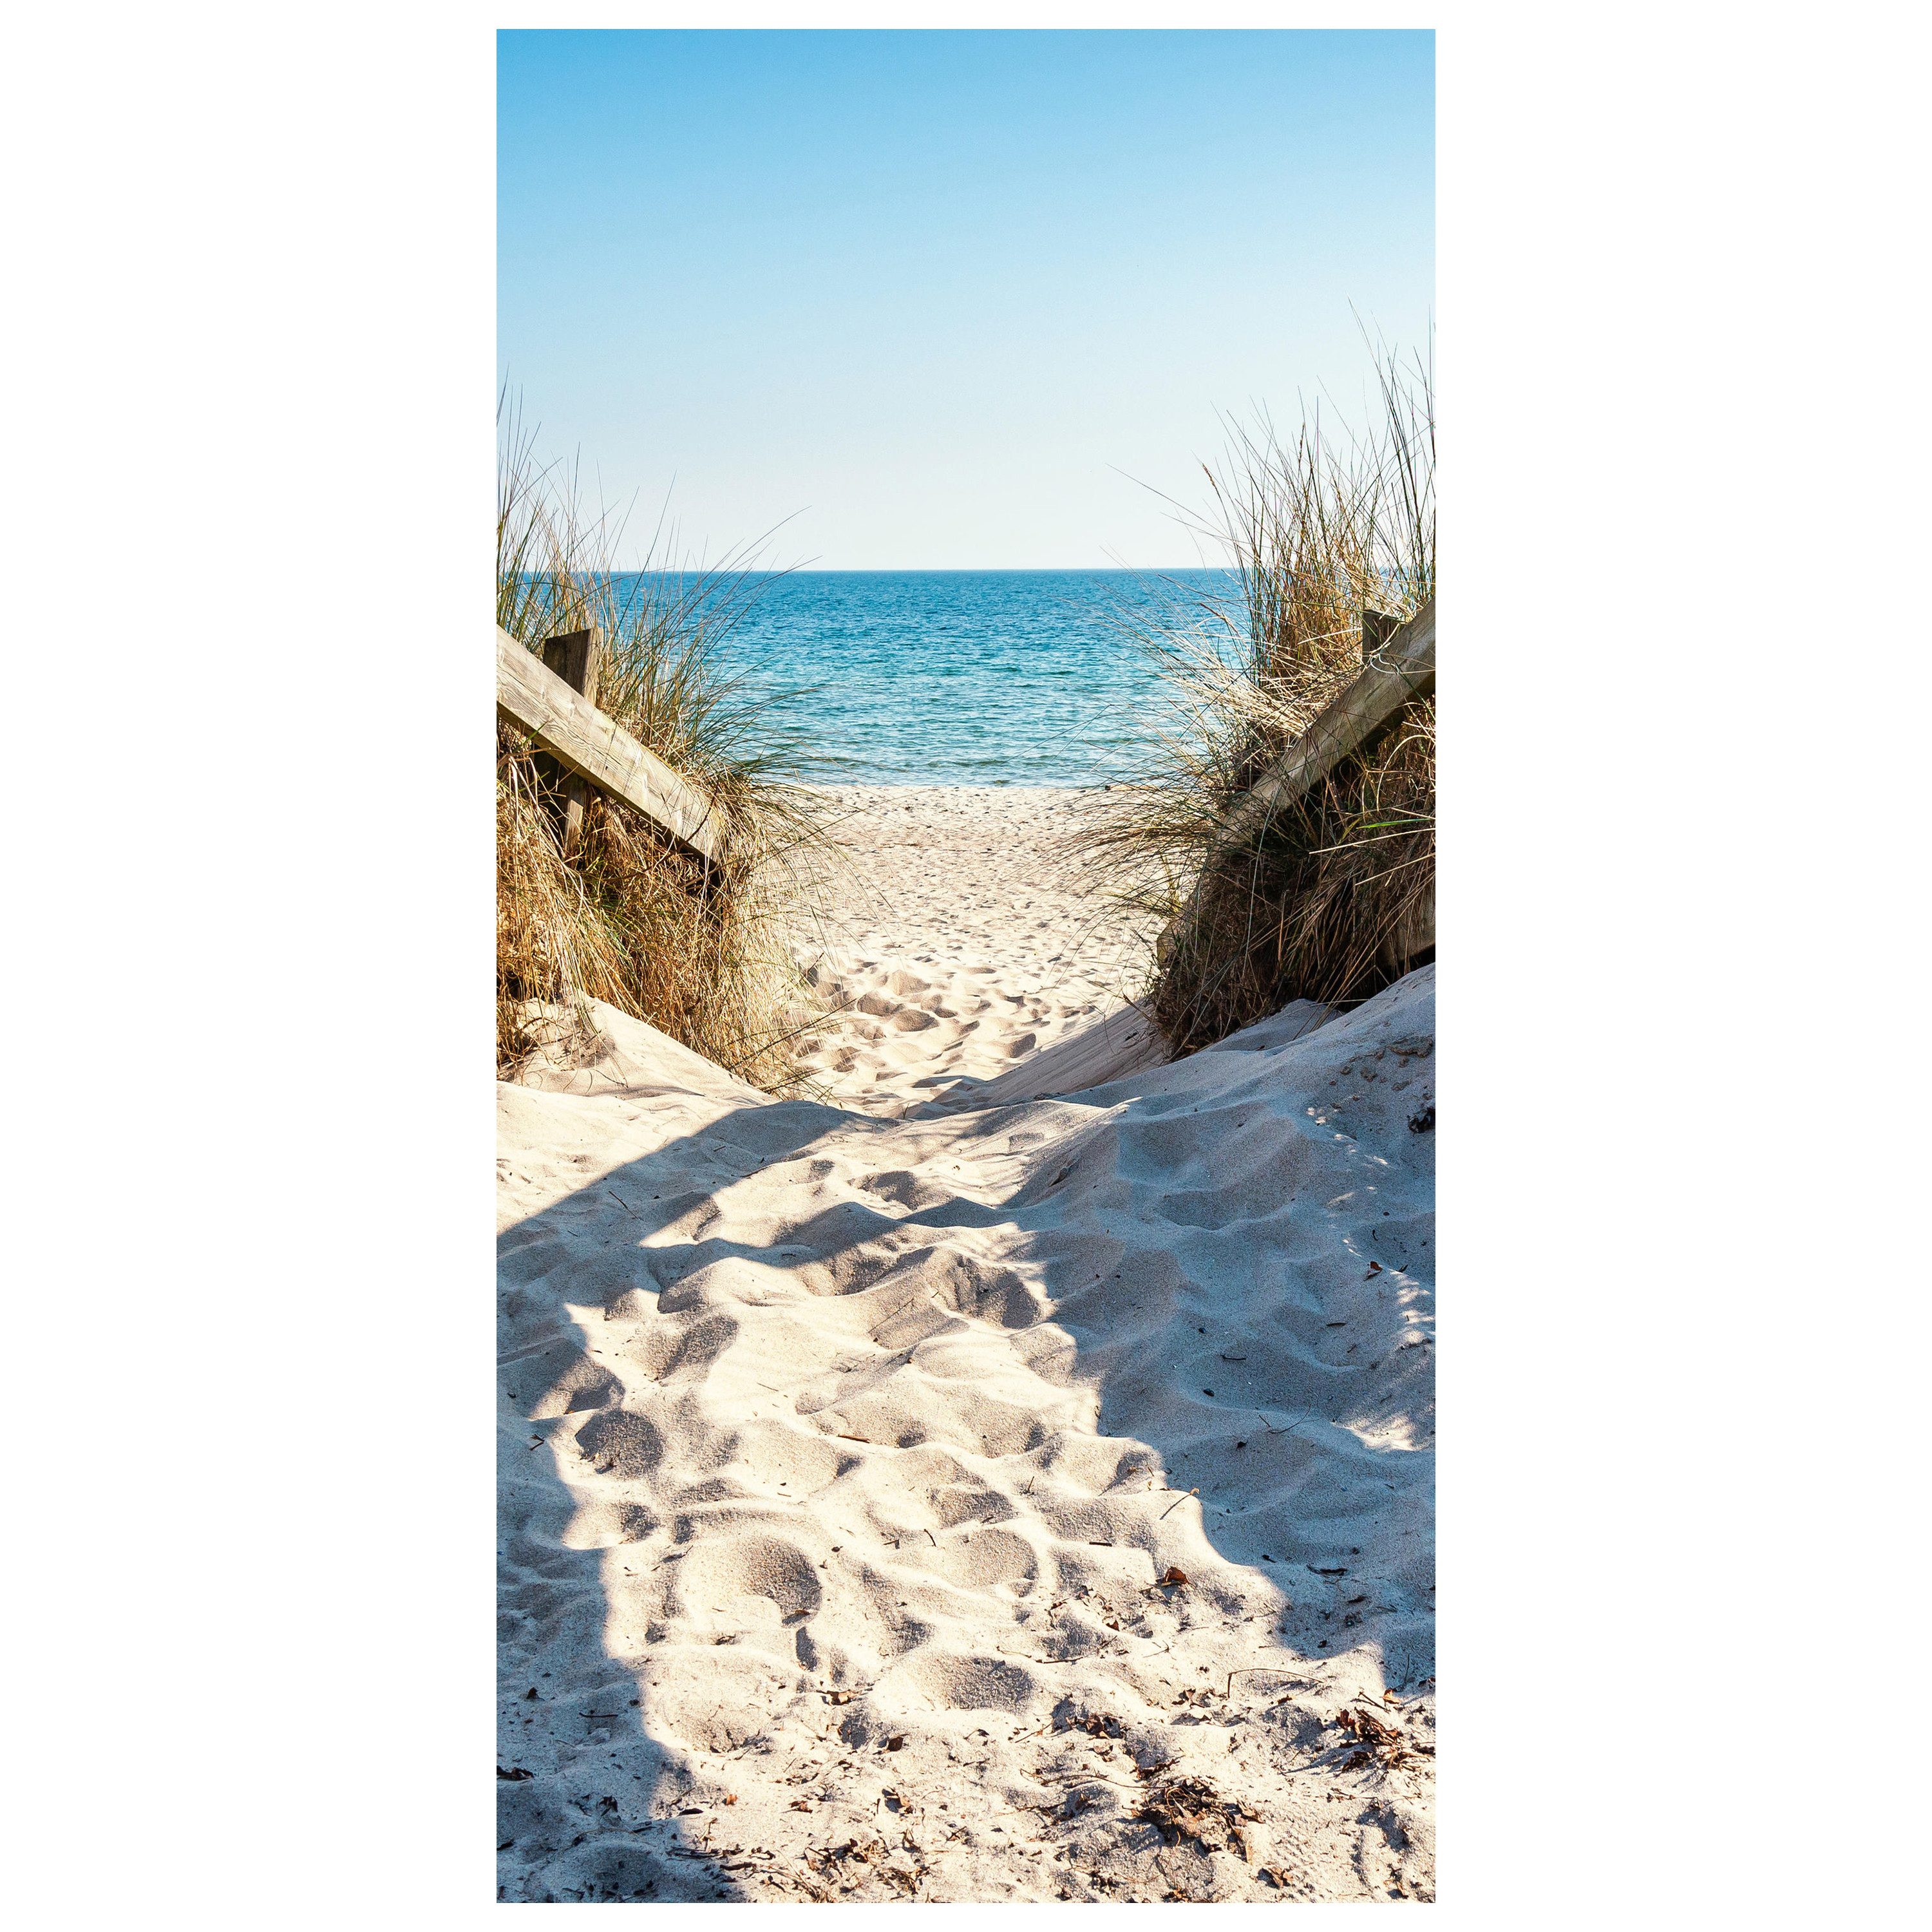 wandmotiv24 Türtapete Weg an den Sand-strand, Meer, Wasser, glatt, Fototapete, Wandtapete, Motivtapete, matt, selbstklebende Dekorfolie